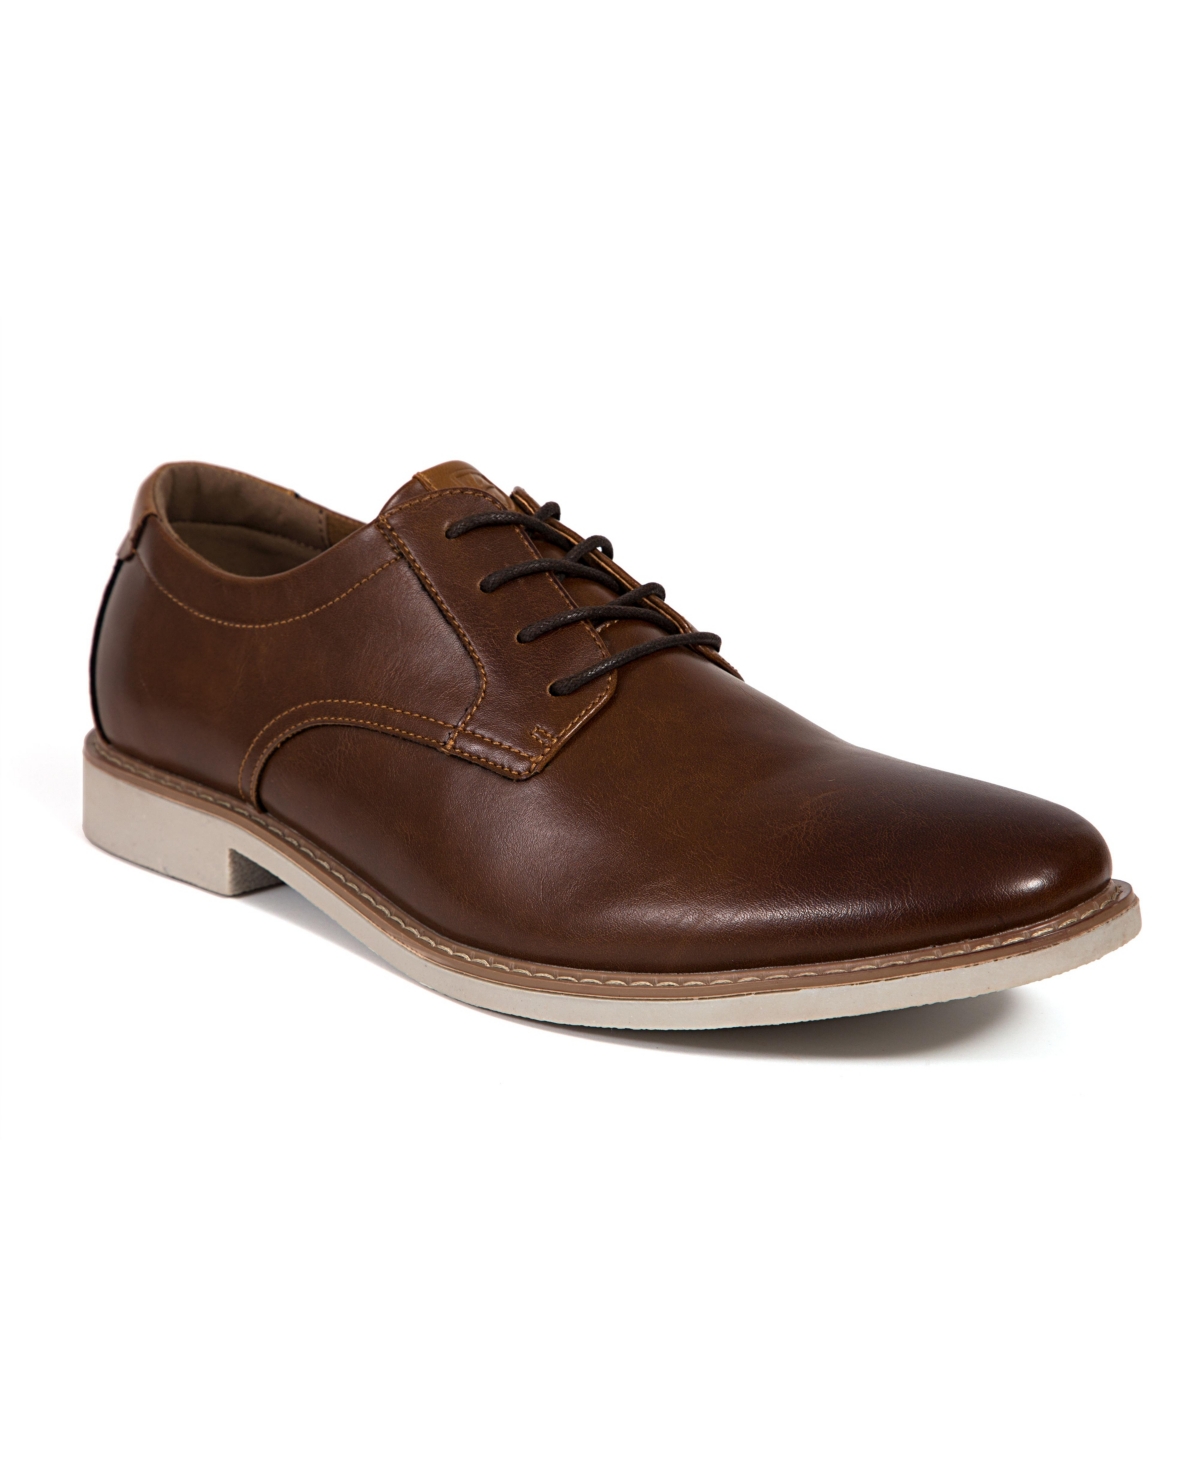 Men's Marco Dress Comfort Oxford Shoes - Brown